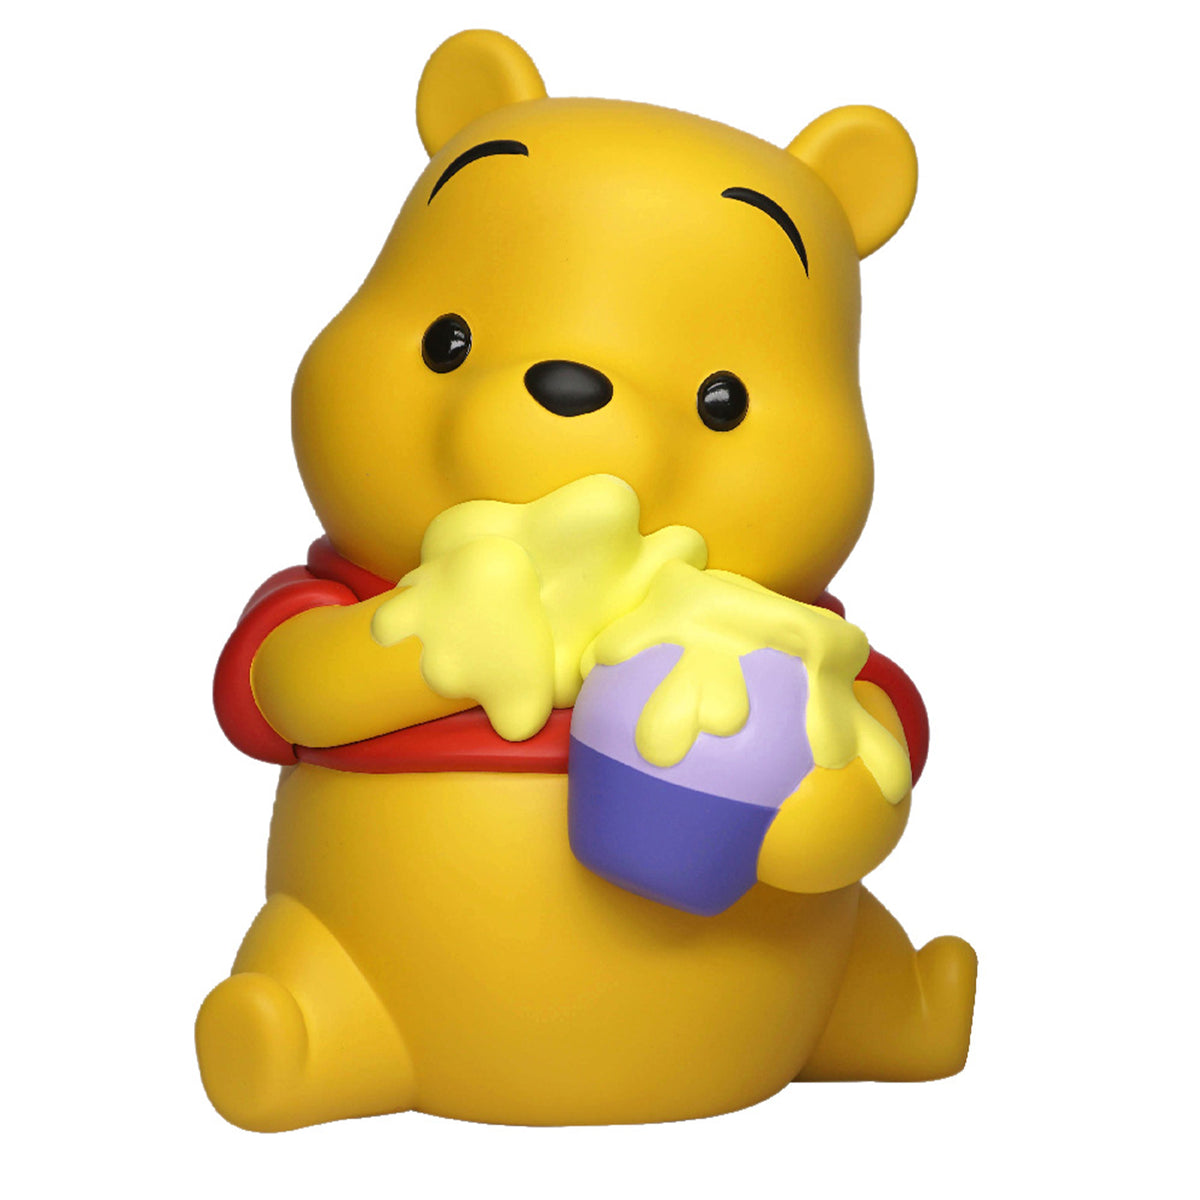 Disney Winnie the Pooh Honey Pot Figural Display Bank